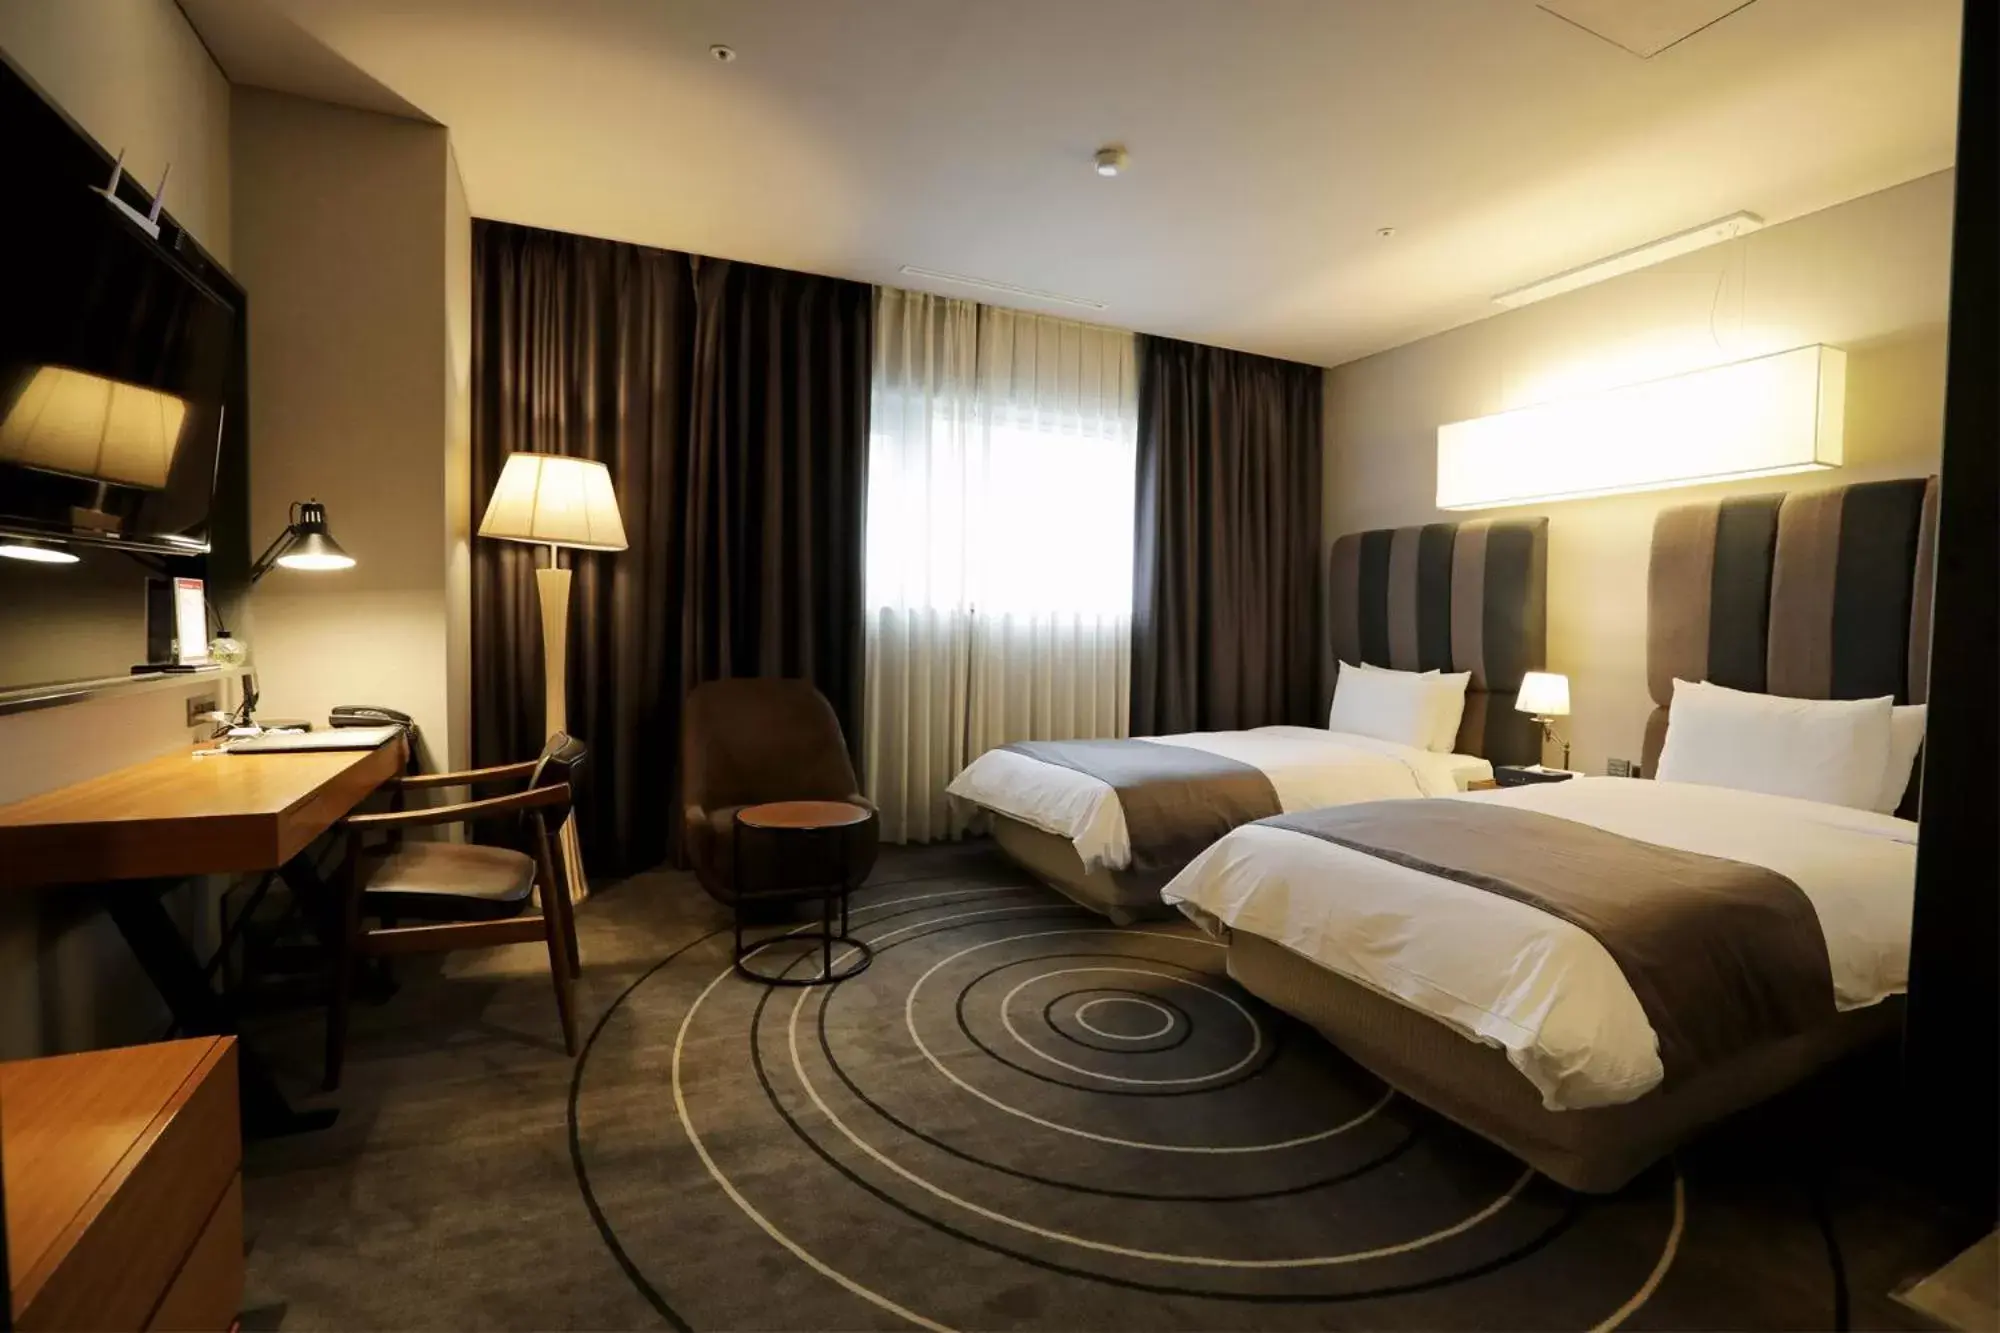 Bedroom, Bed in Best Louis Hamilton Hotel Haeundae